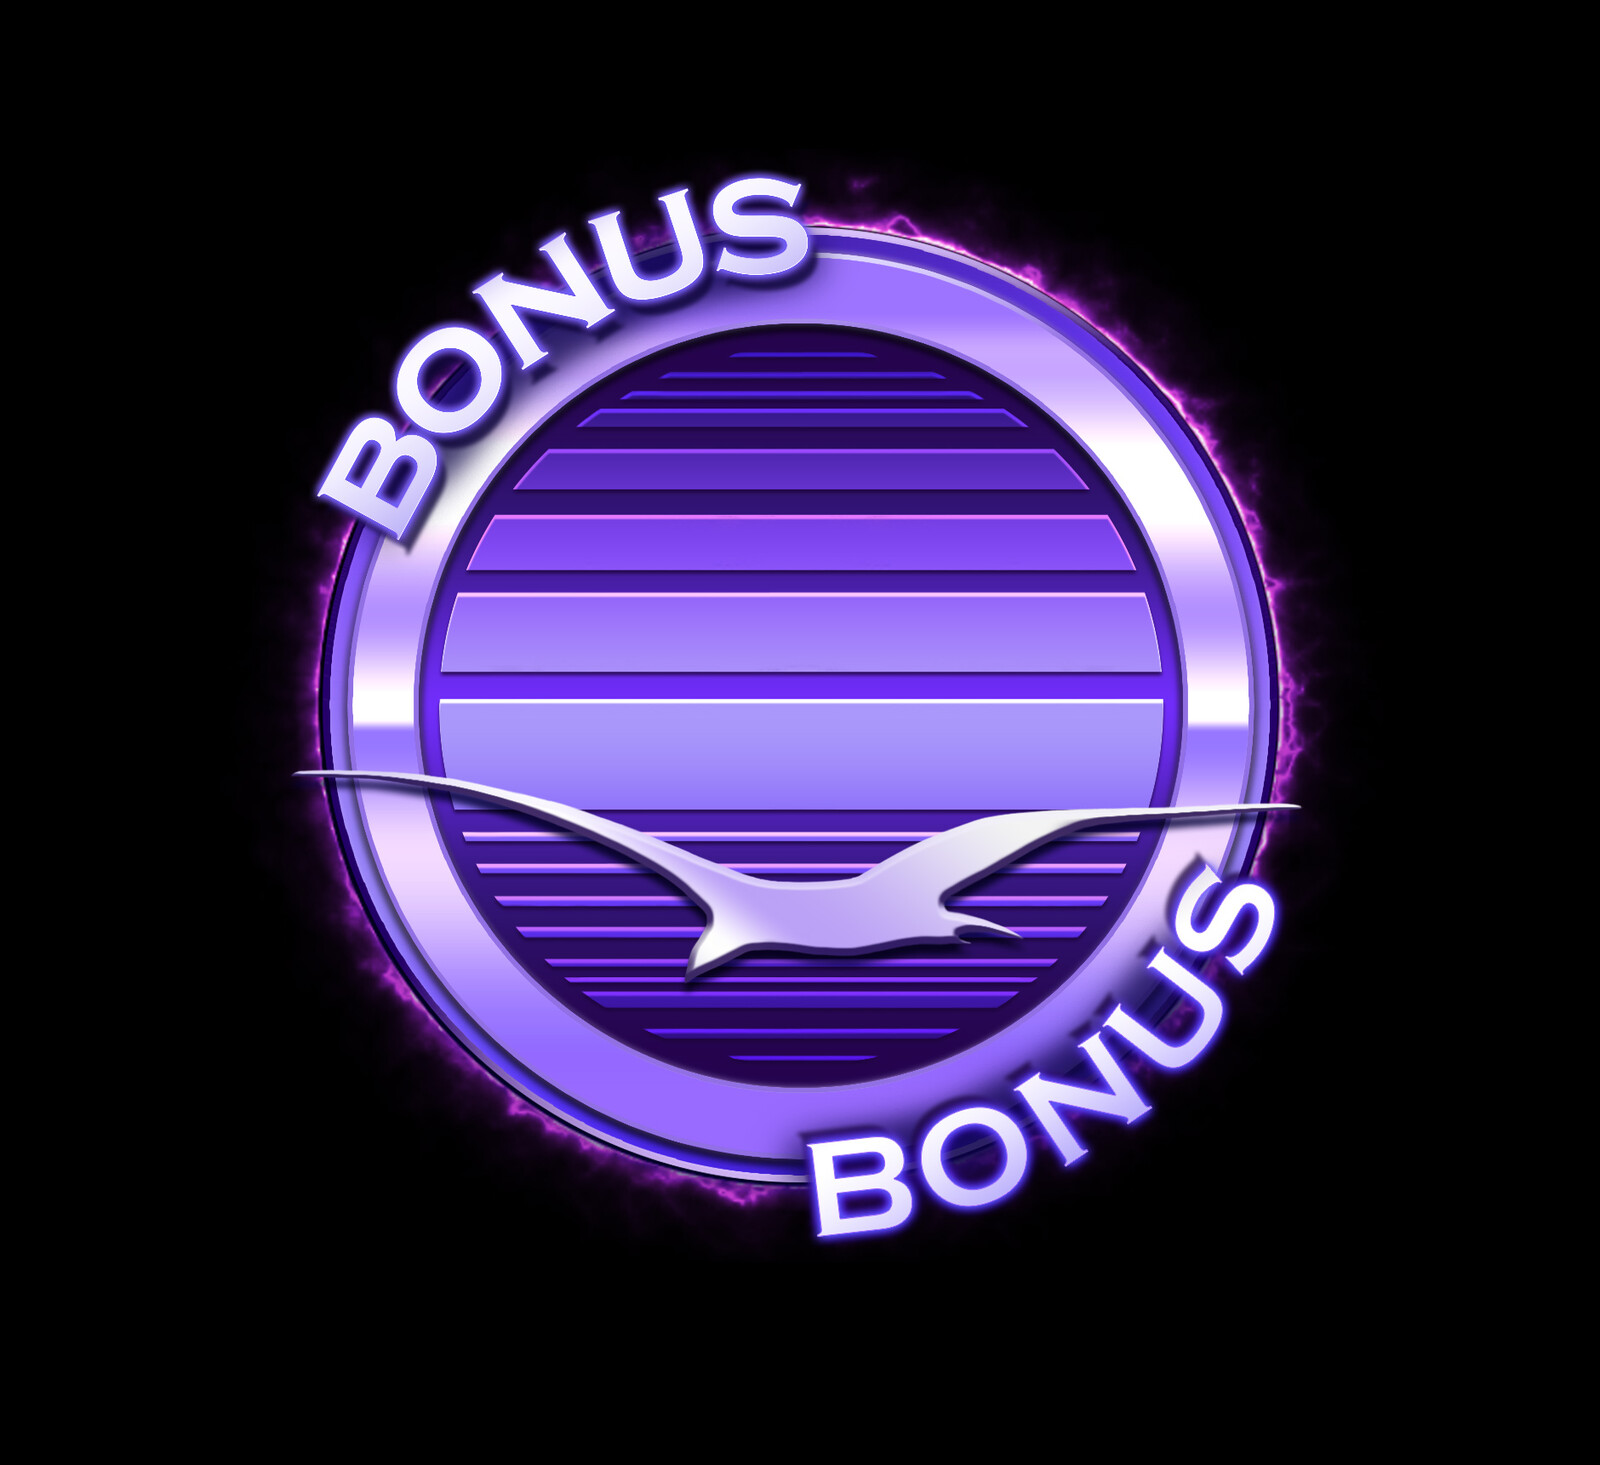 Bonus Scatter symbol